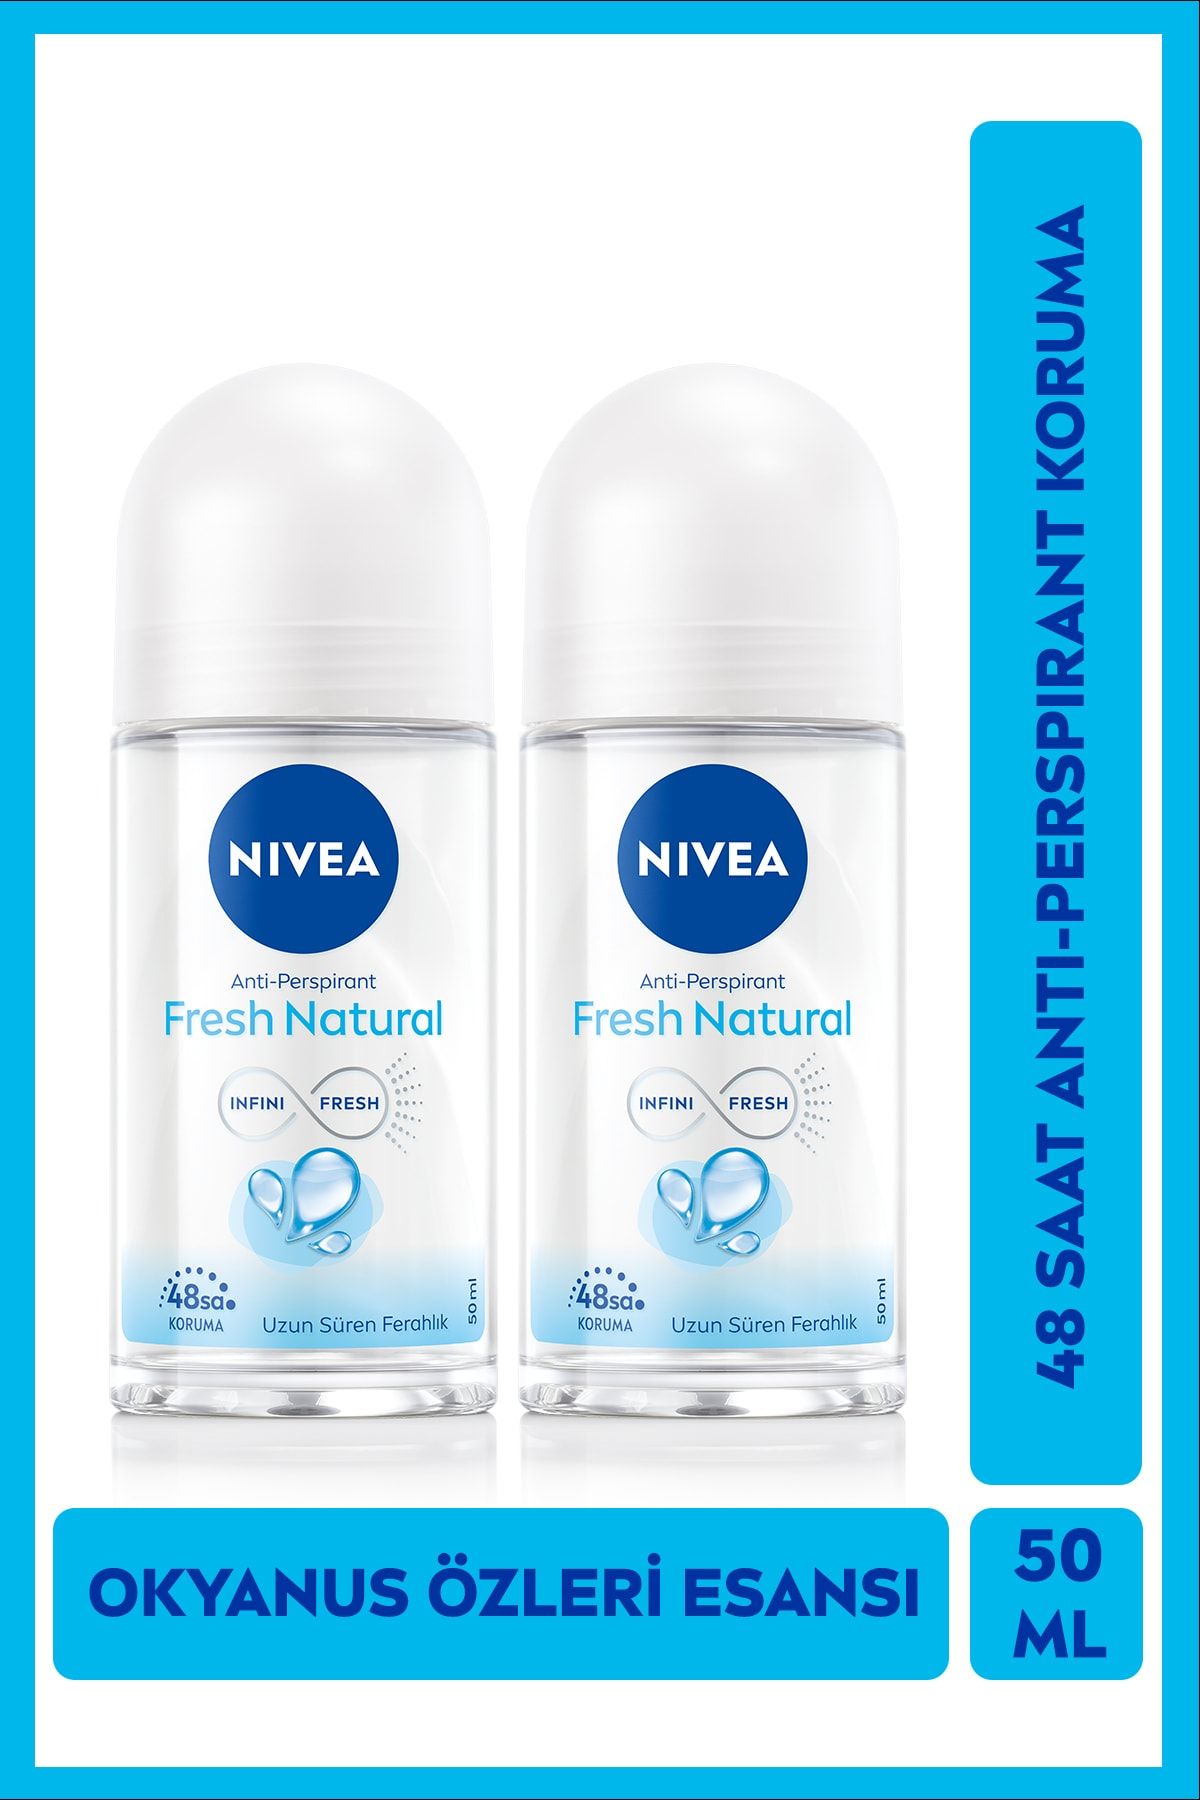 NIVEA Fresh Natural Kadın Roll On Deodorant5 50 ml X2 Adet,48 Saat Anti-perspirant Koruması